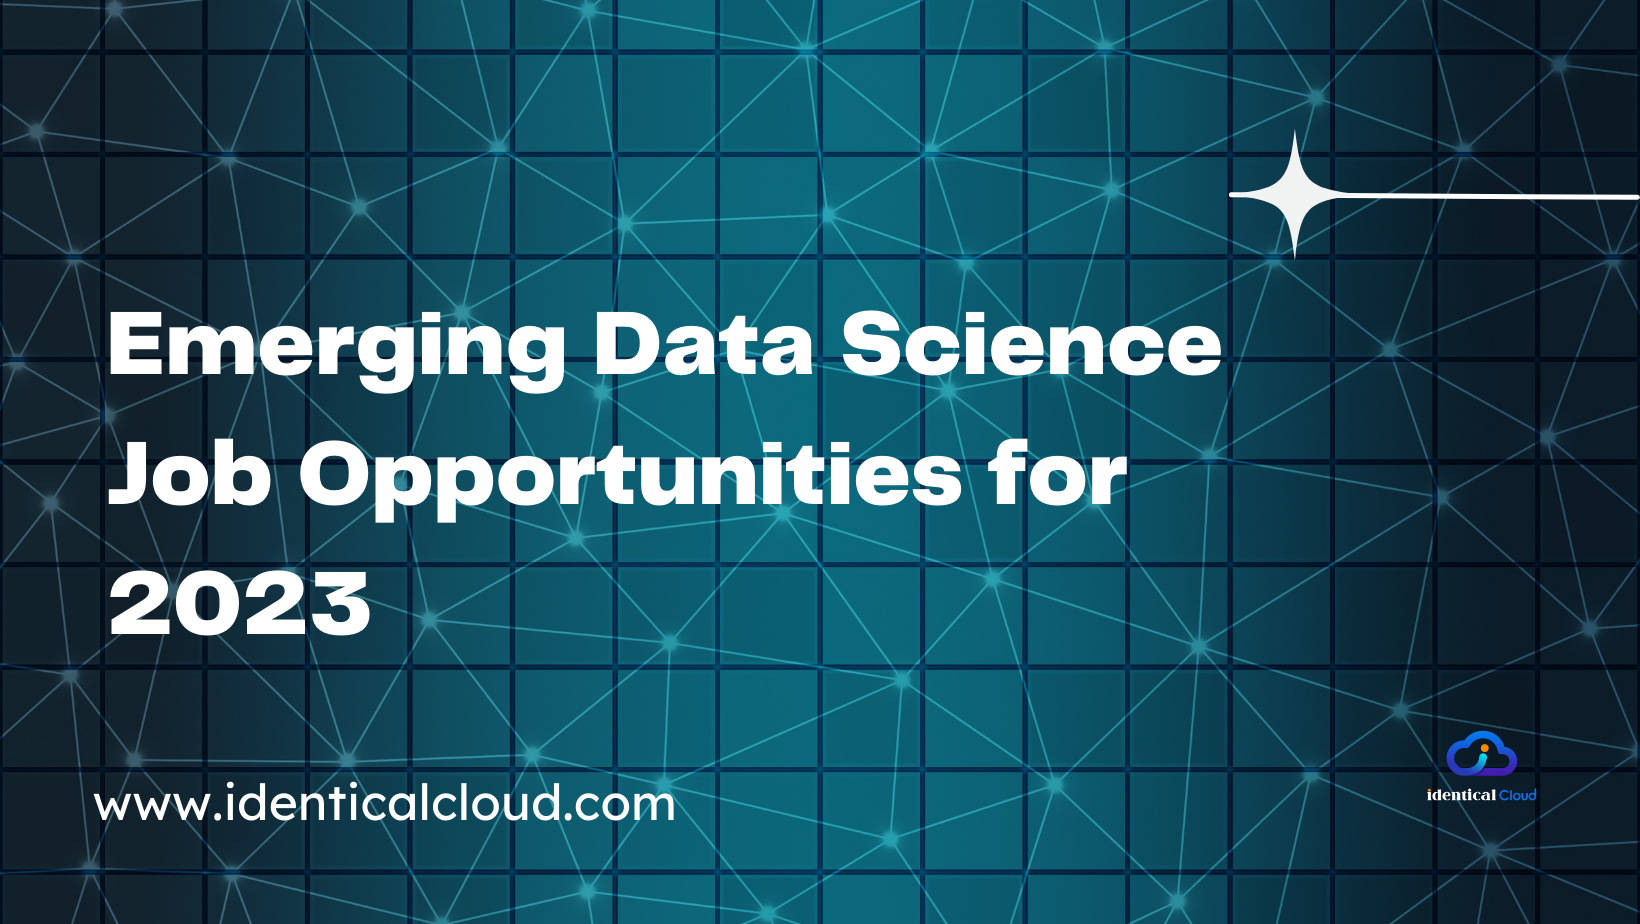 Emerging Data Science Job Opportunities for 2023 - identicalcloud.com